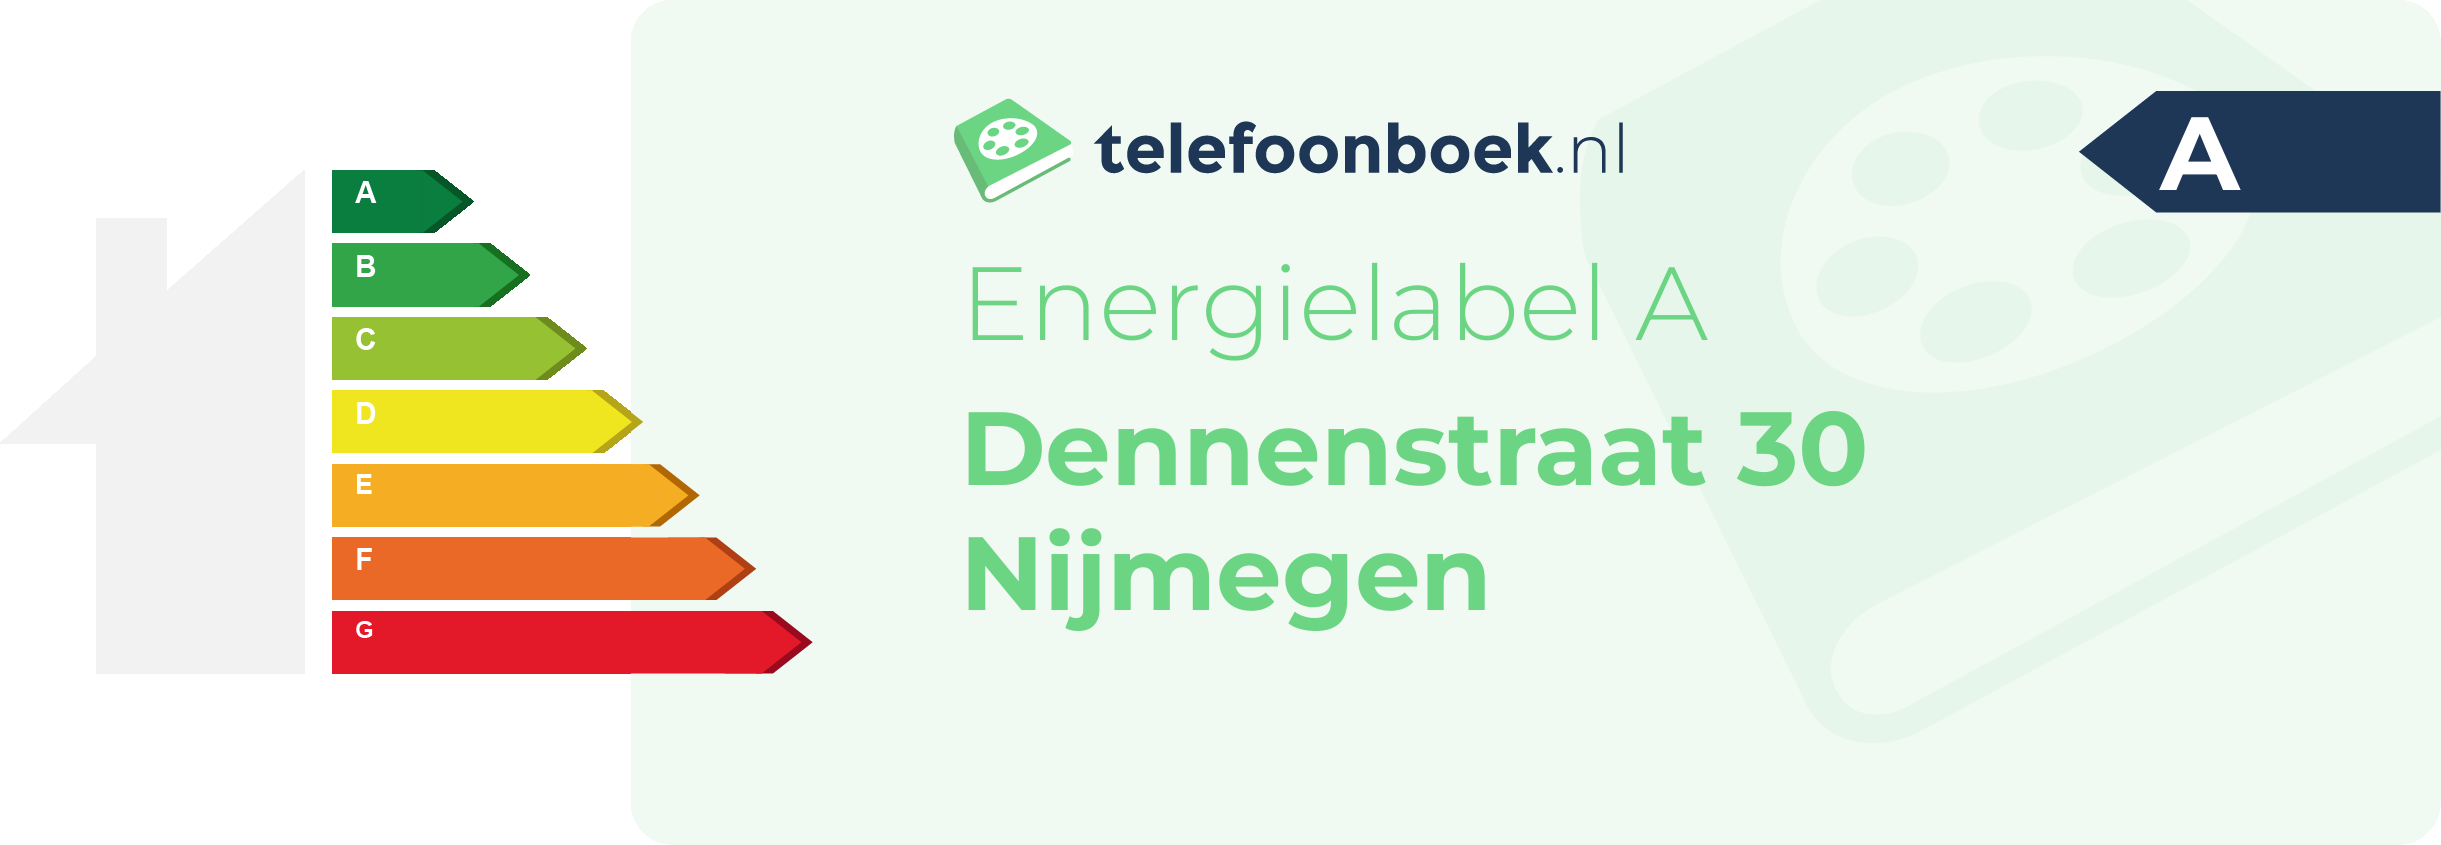 Energielabel Dennenstraat 30 Nijmegen